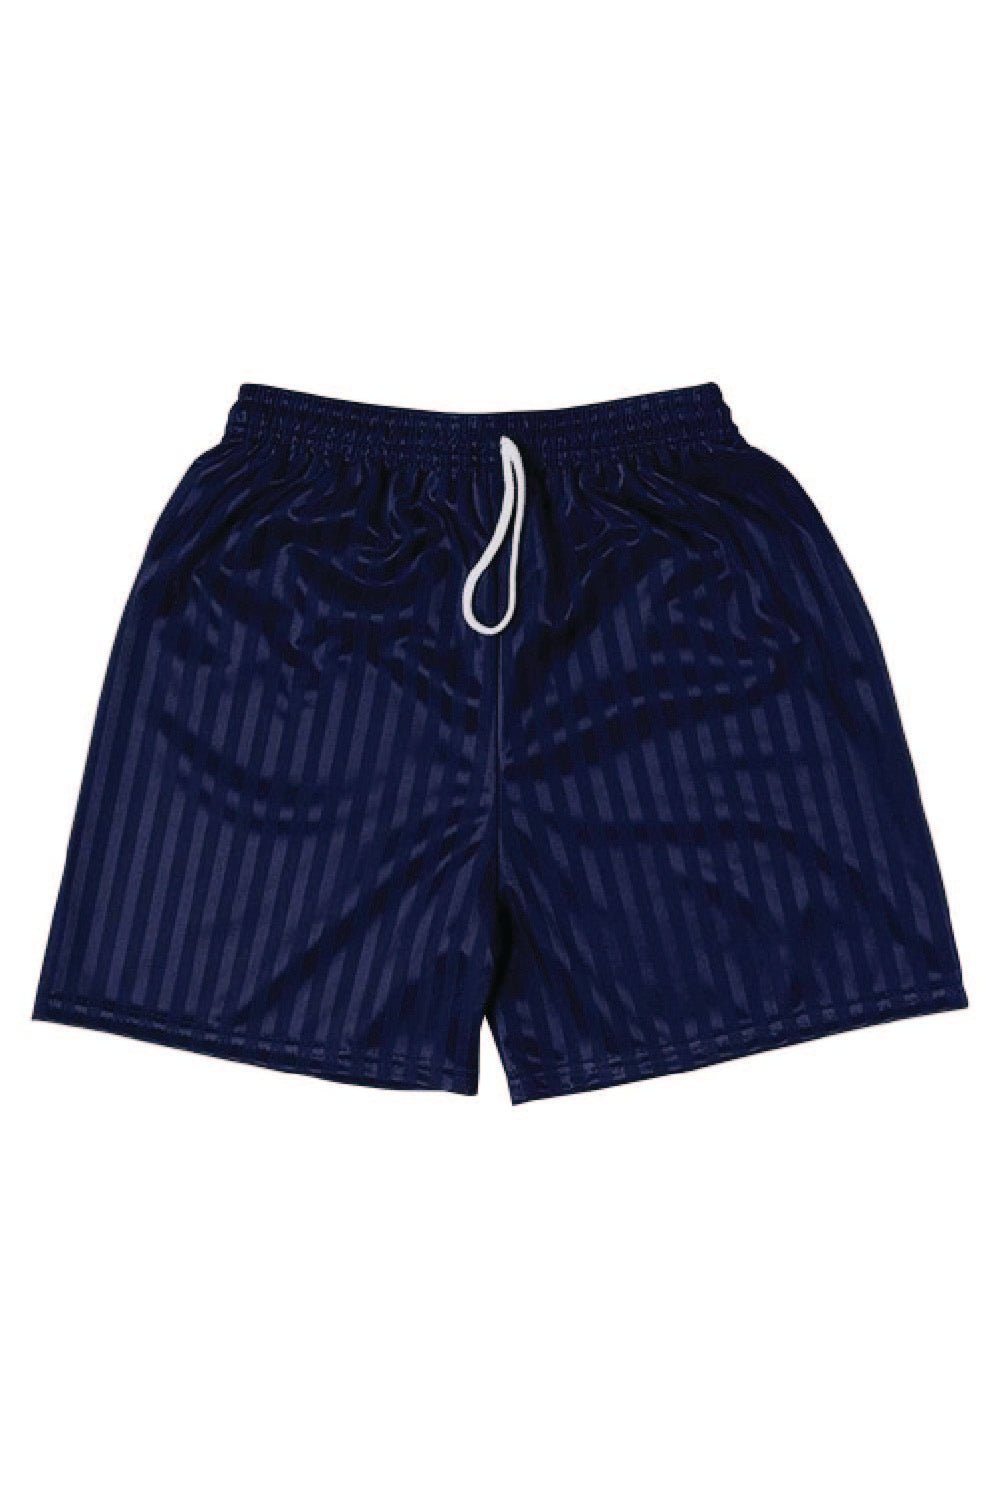 PE Shorts - Navy - Uniformwise Schoolwear